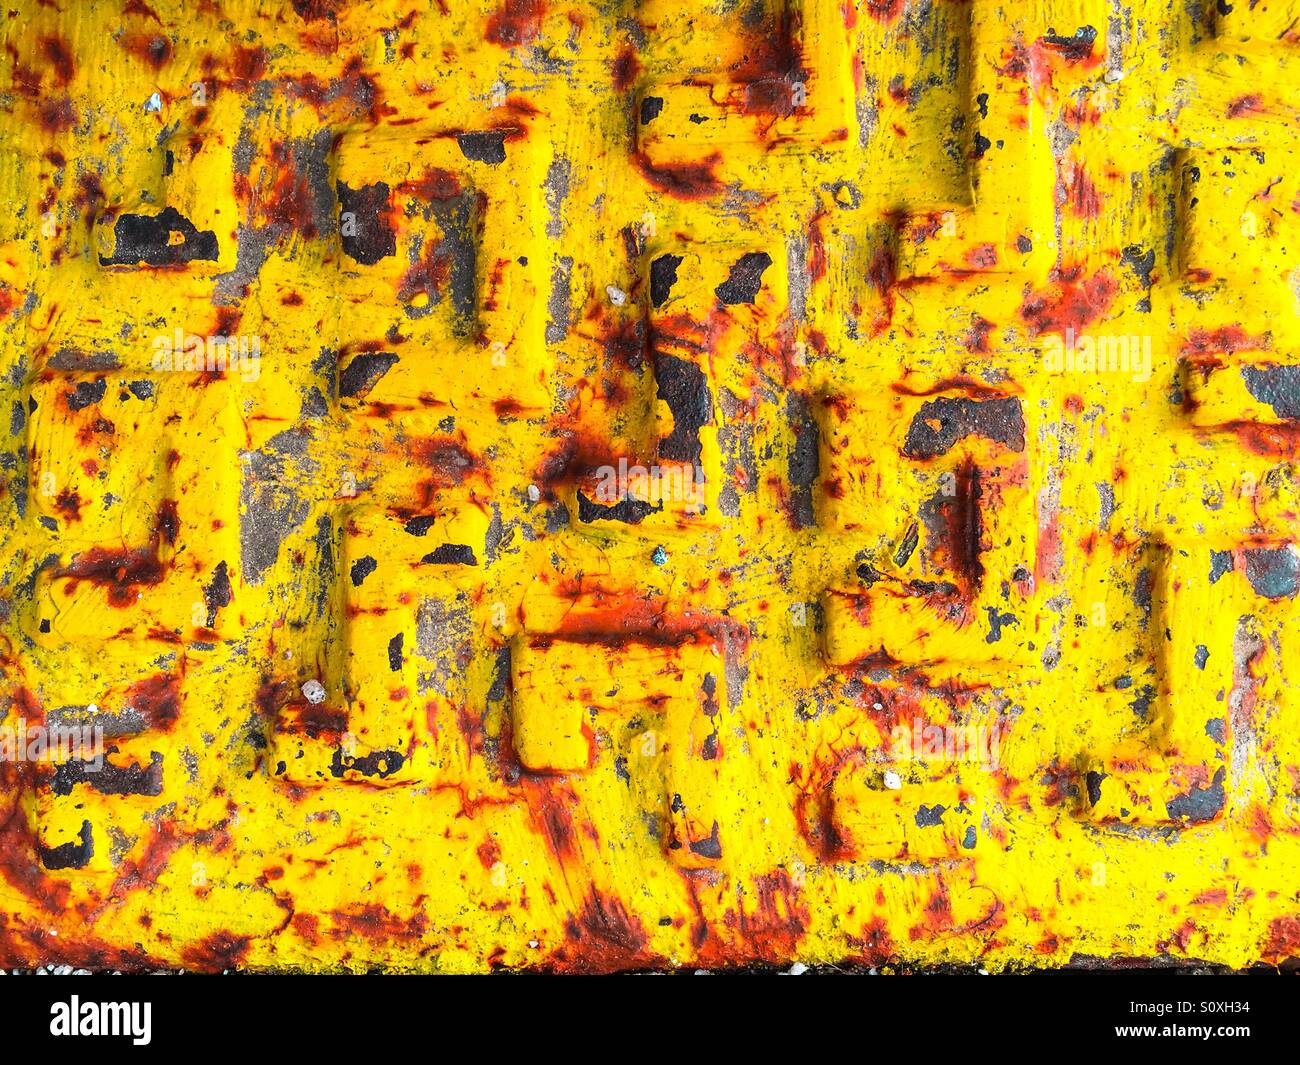 Rusty metal texture avec peeling peinture jaune Banque D'Images